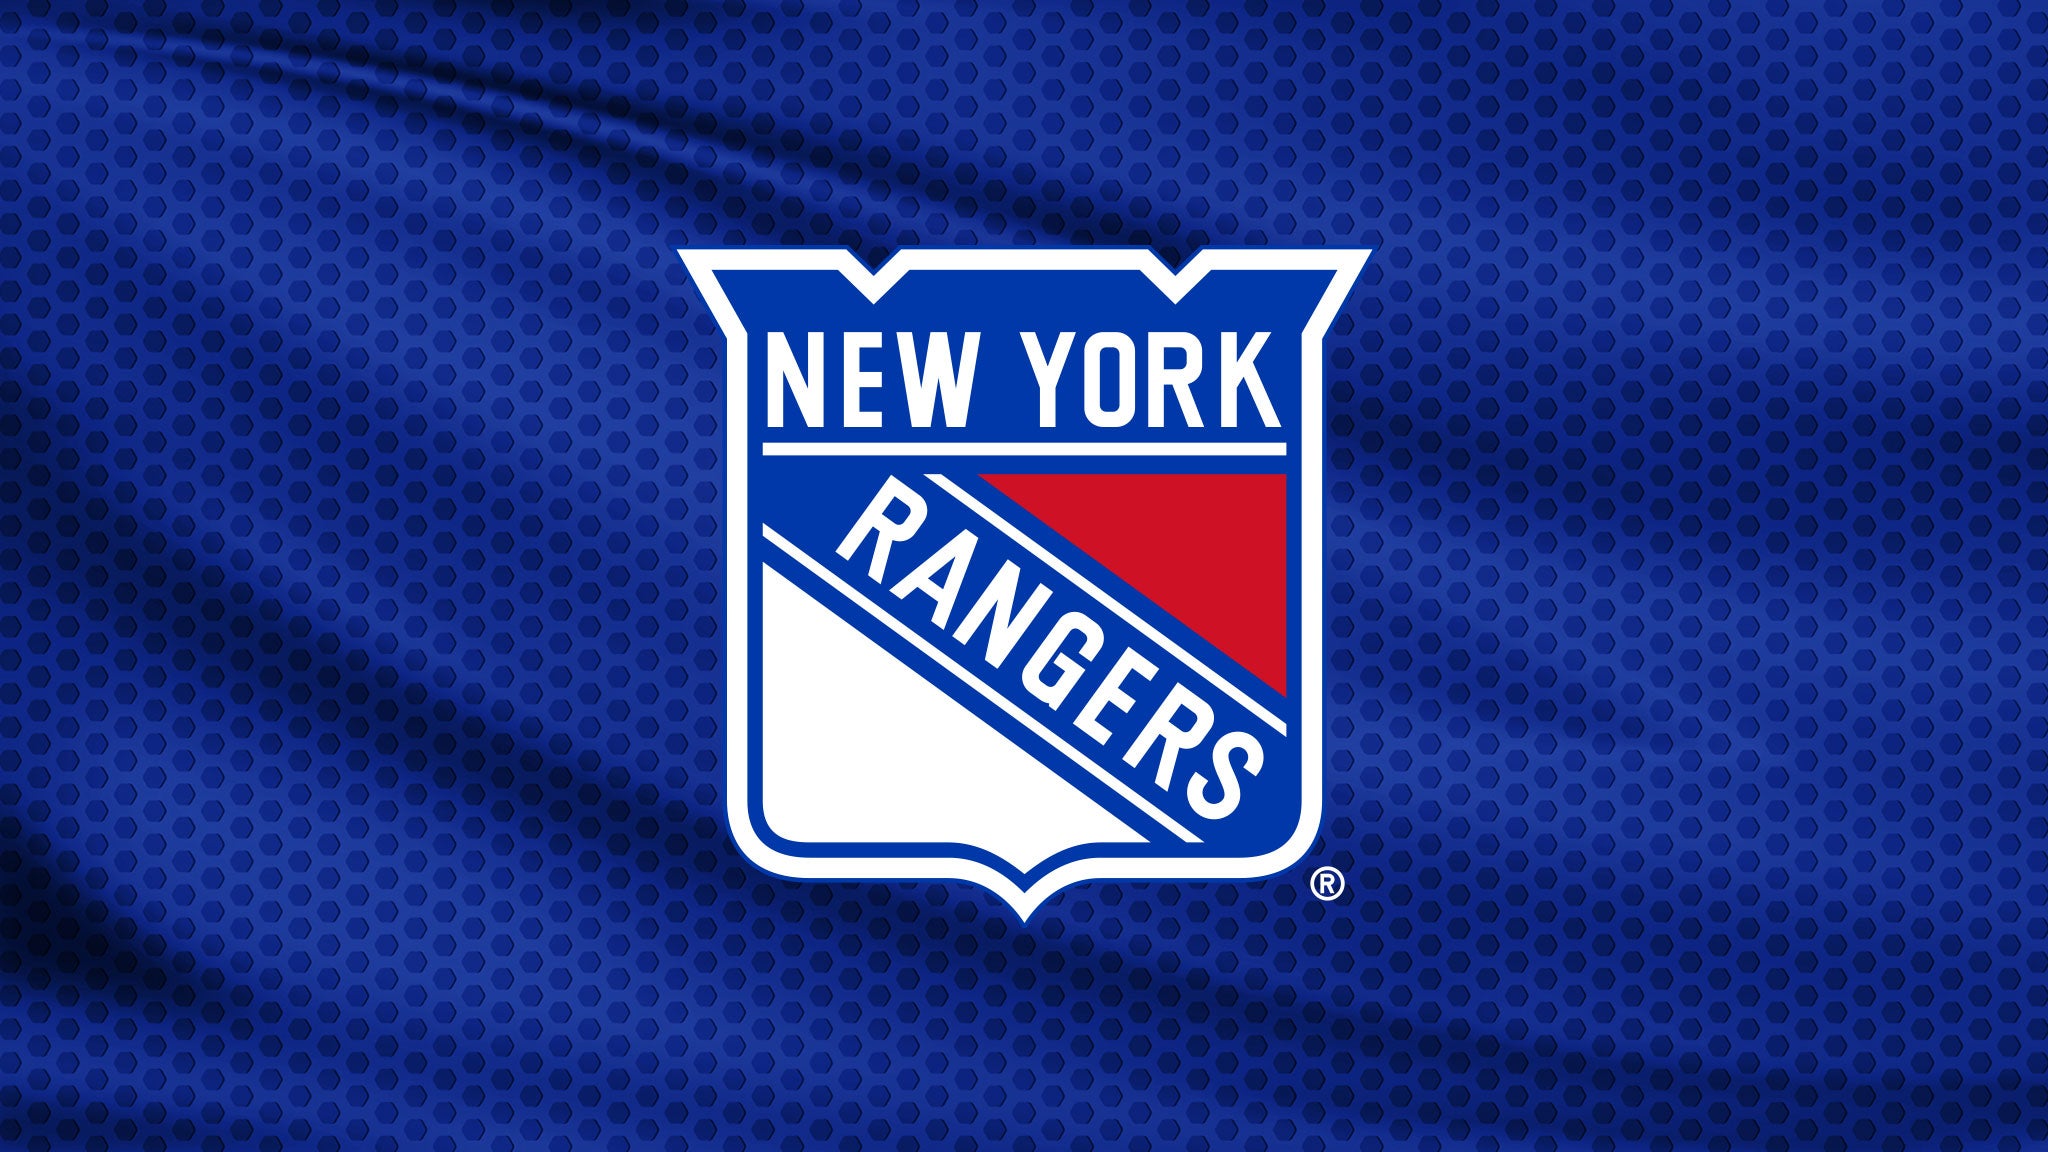 New York Rangers vs. Dallas Stars in New York promo photo for Chase Cardmember Preferred Seating presale offer code